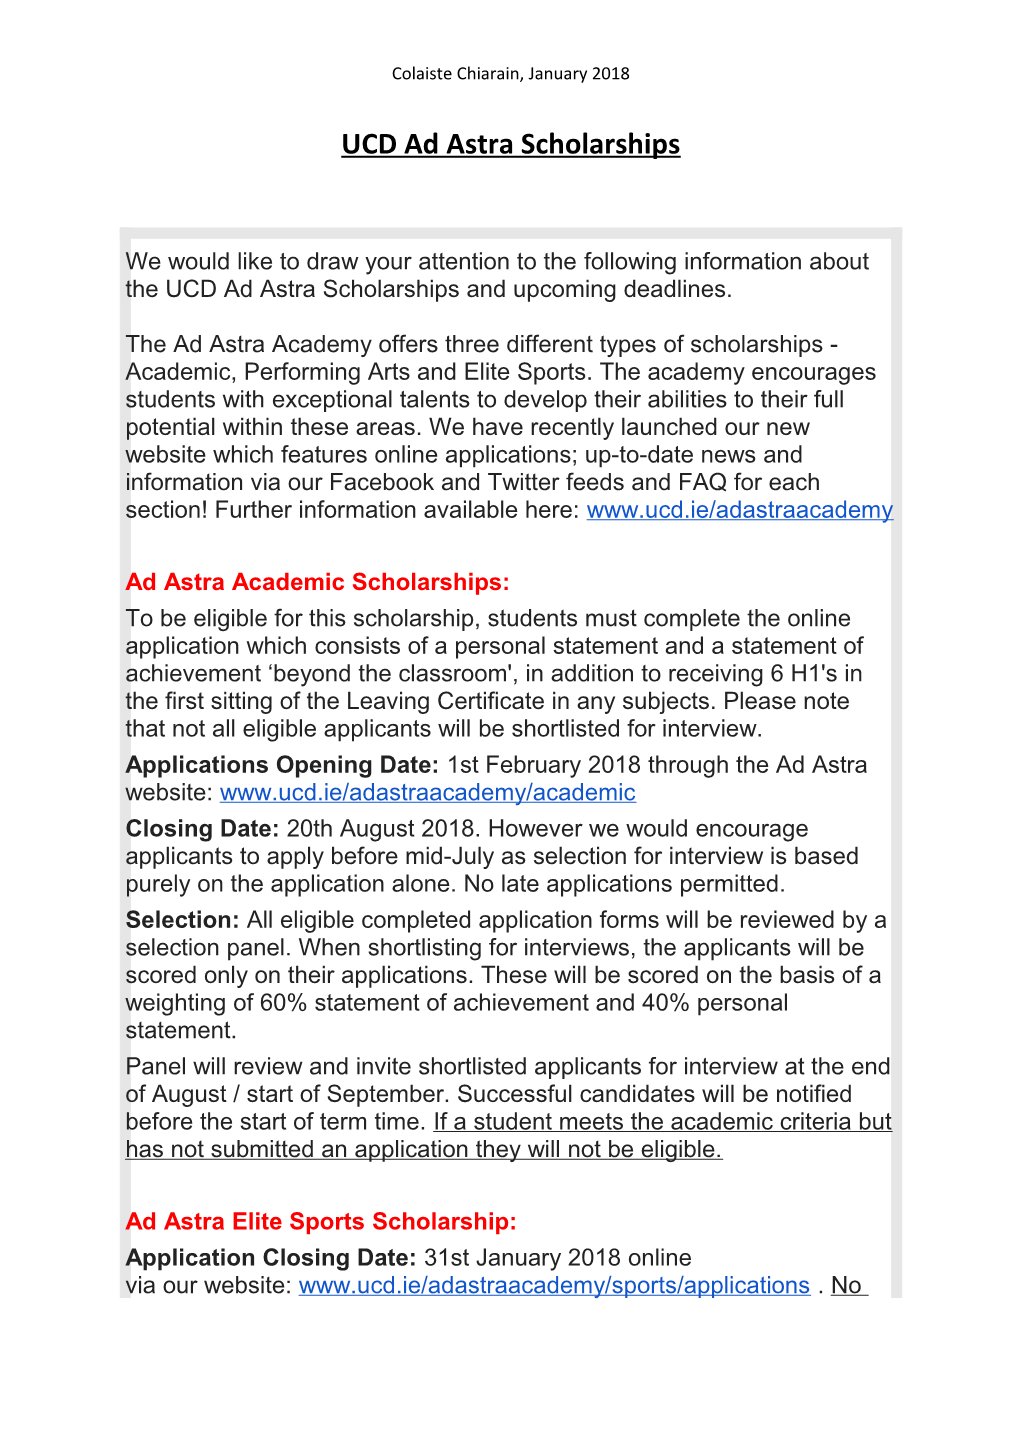 UCD Ad Astra Scholarships